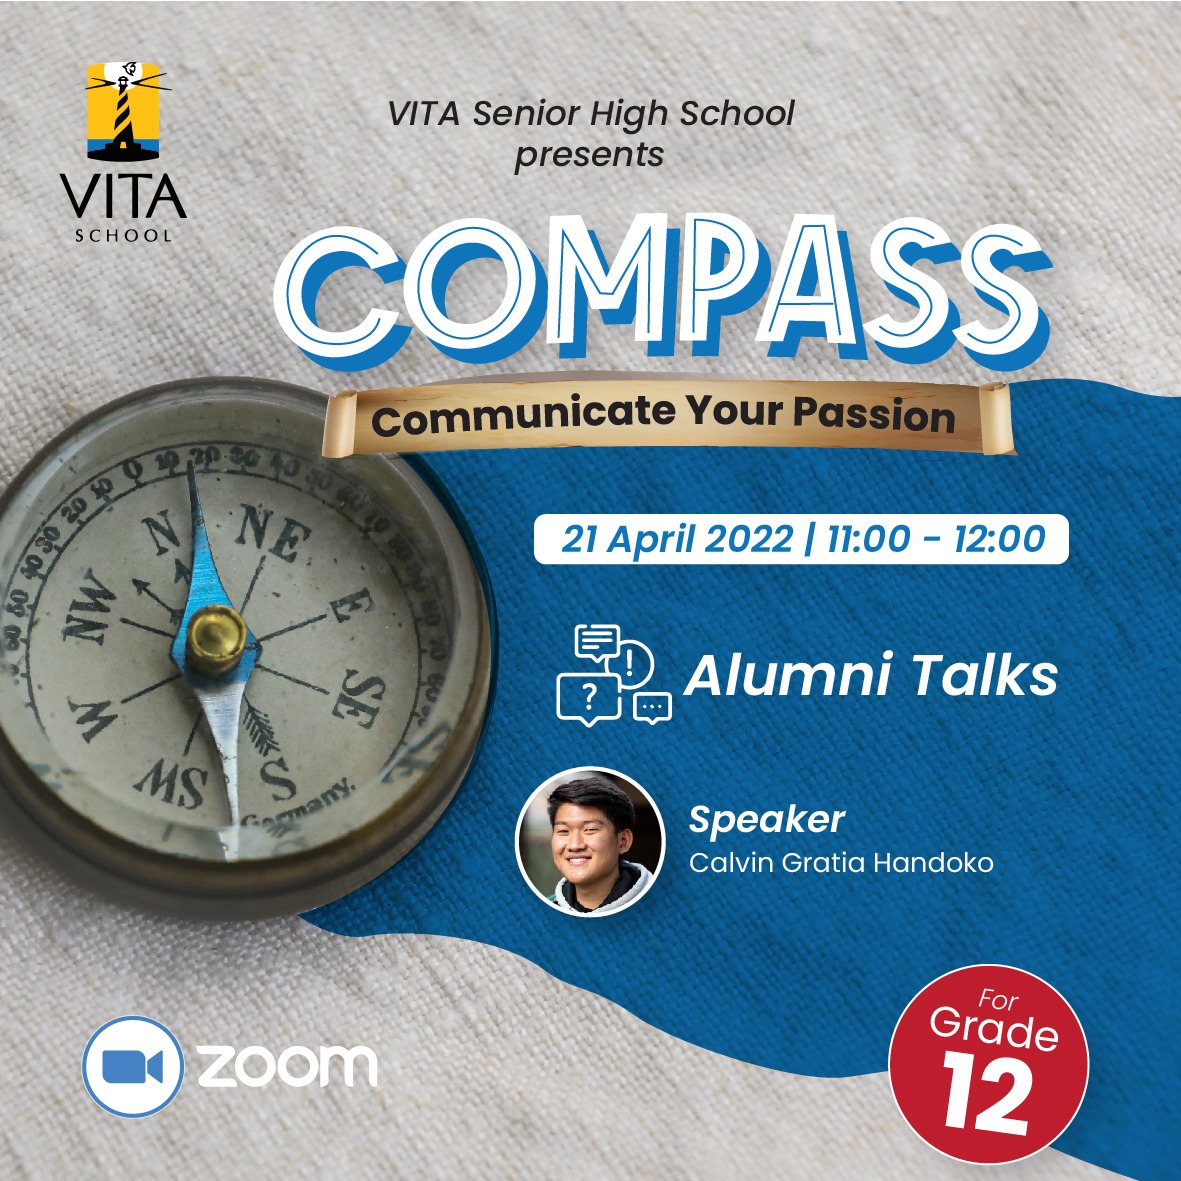 VITA Senior High COMPASS 2022 - Alumni Talks with Calvin Gratia Handoko